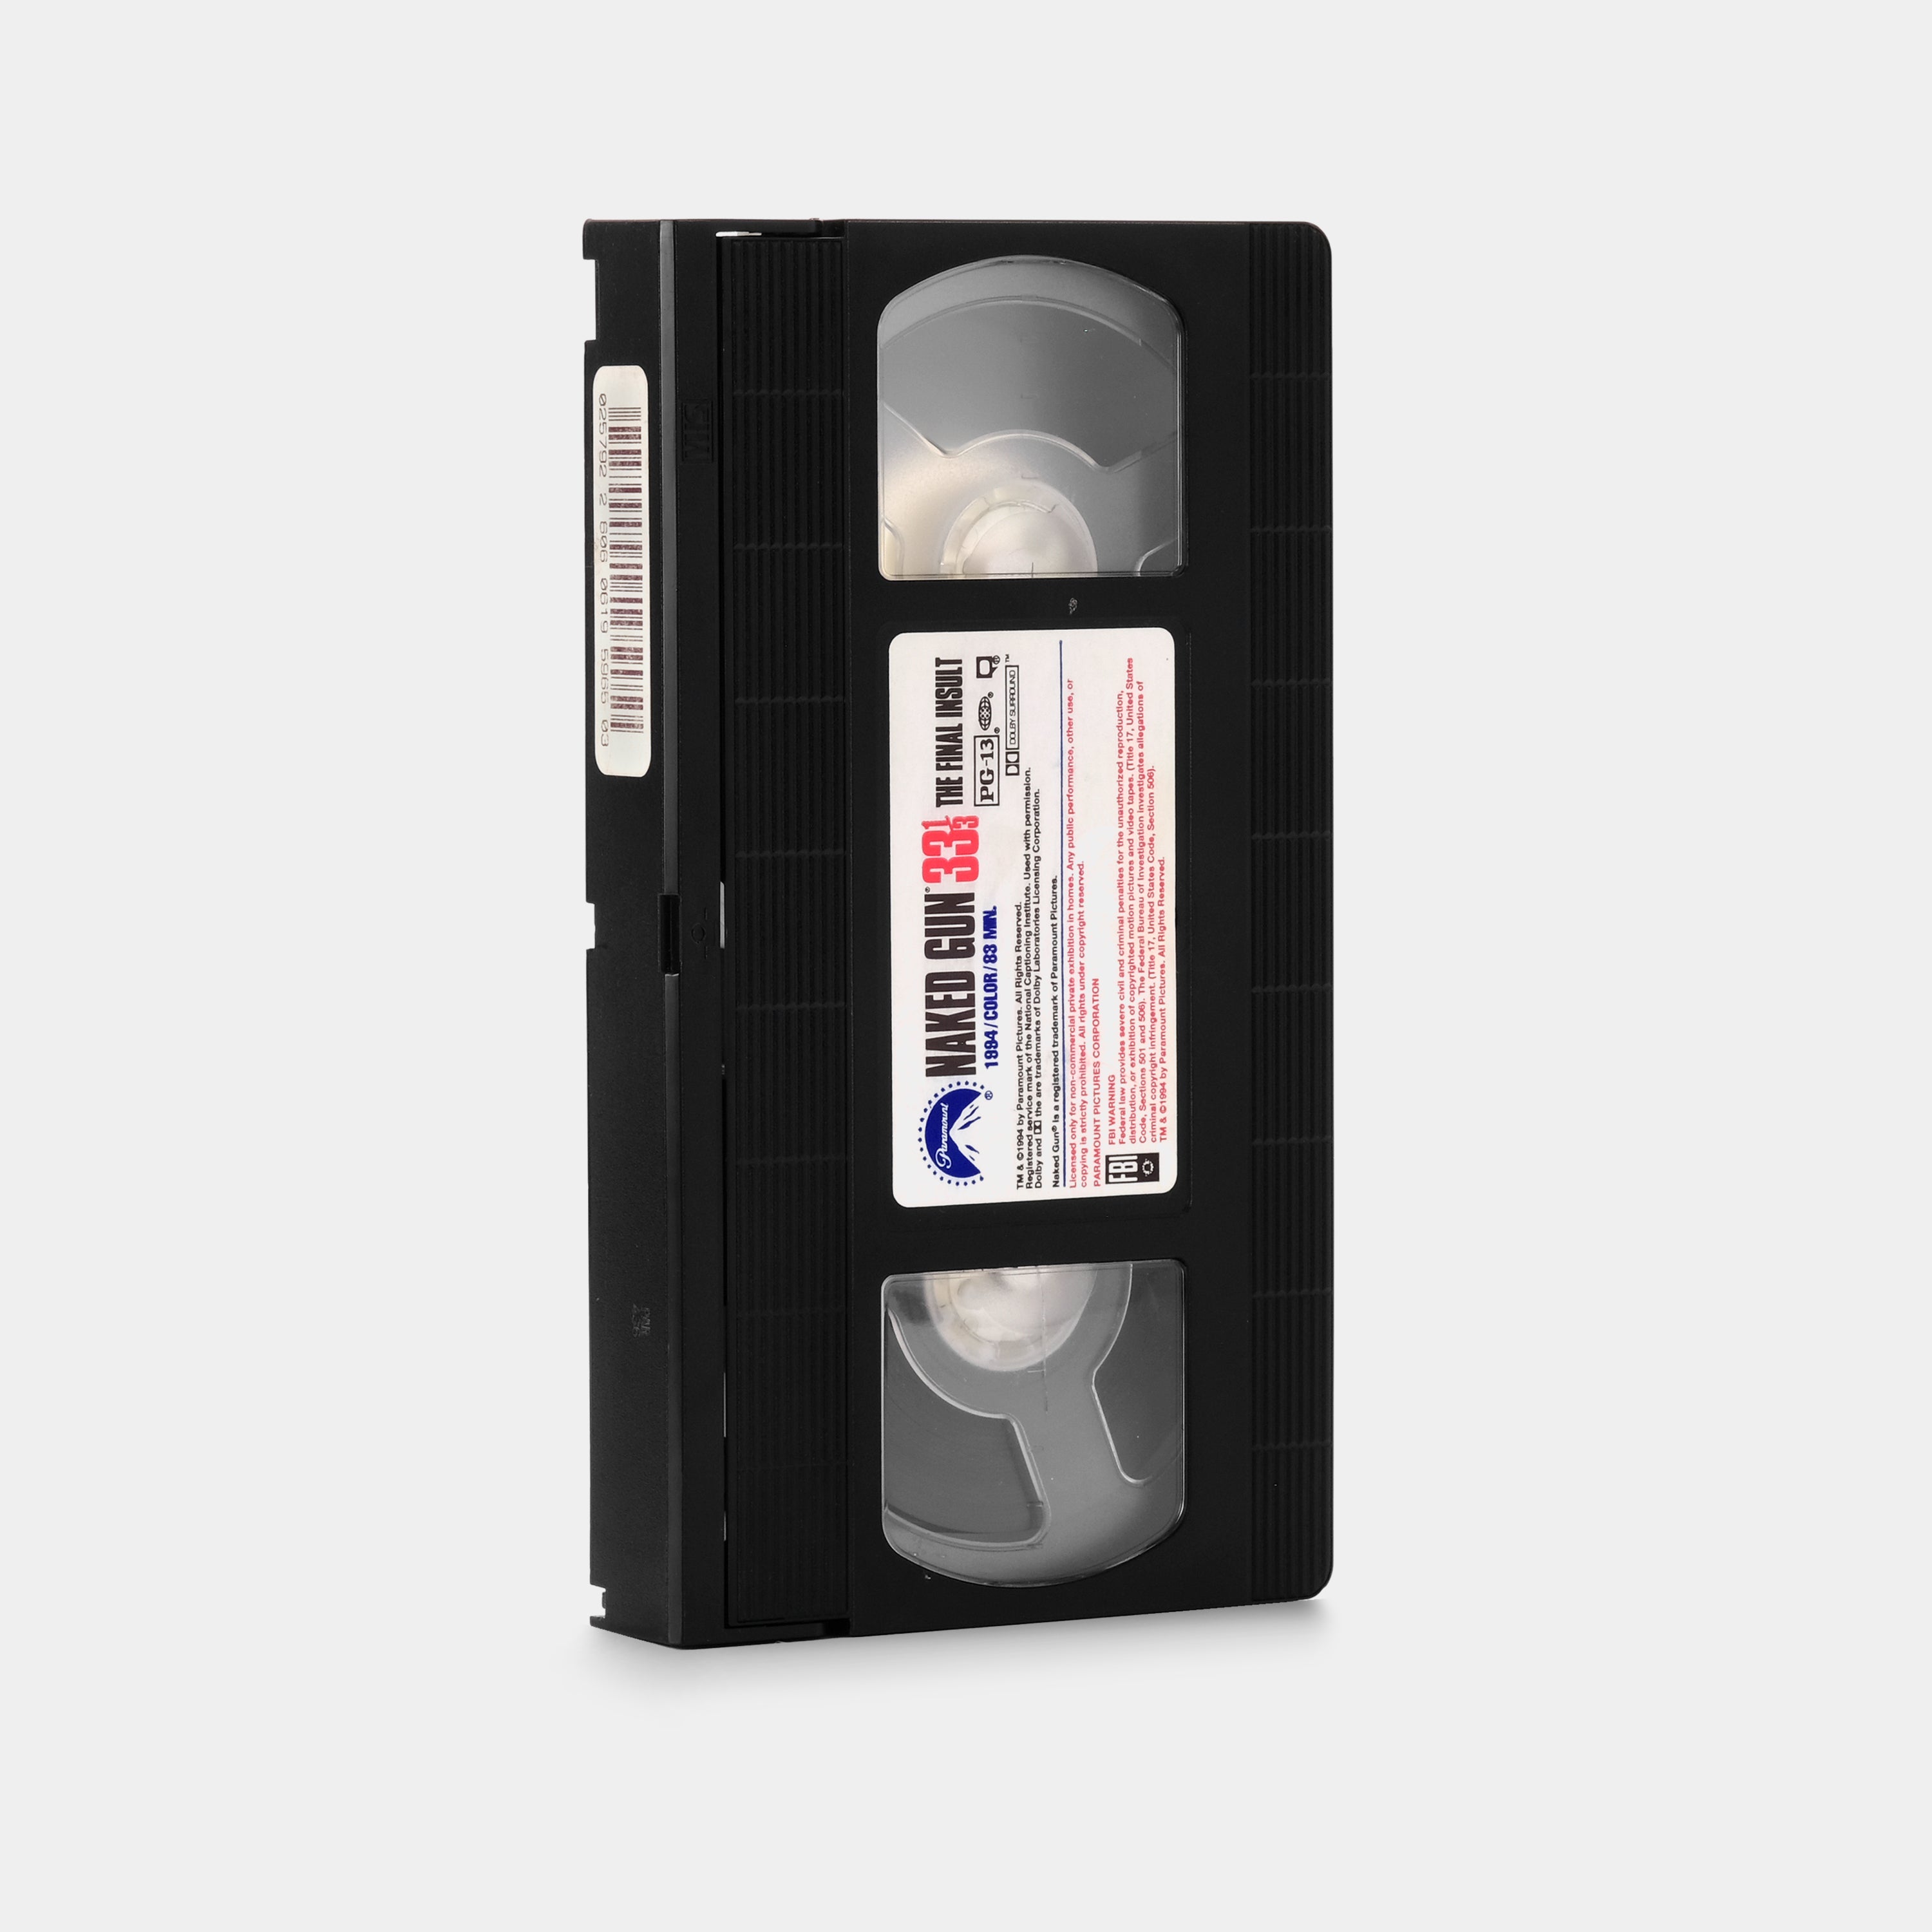 Naked Gun 33 1/3: The Final Insult VHS Tape